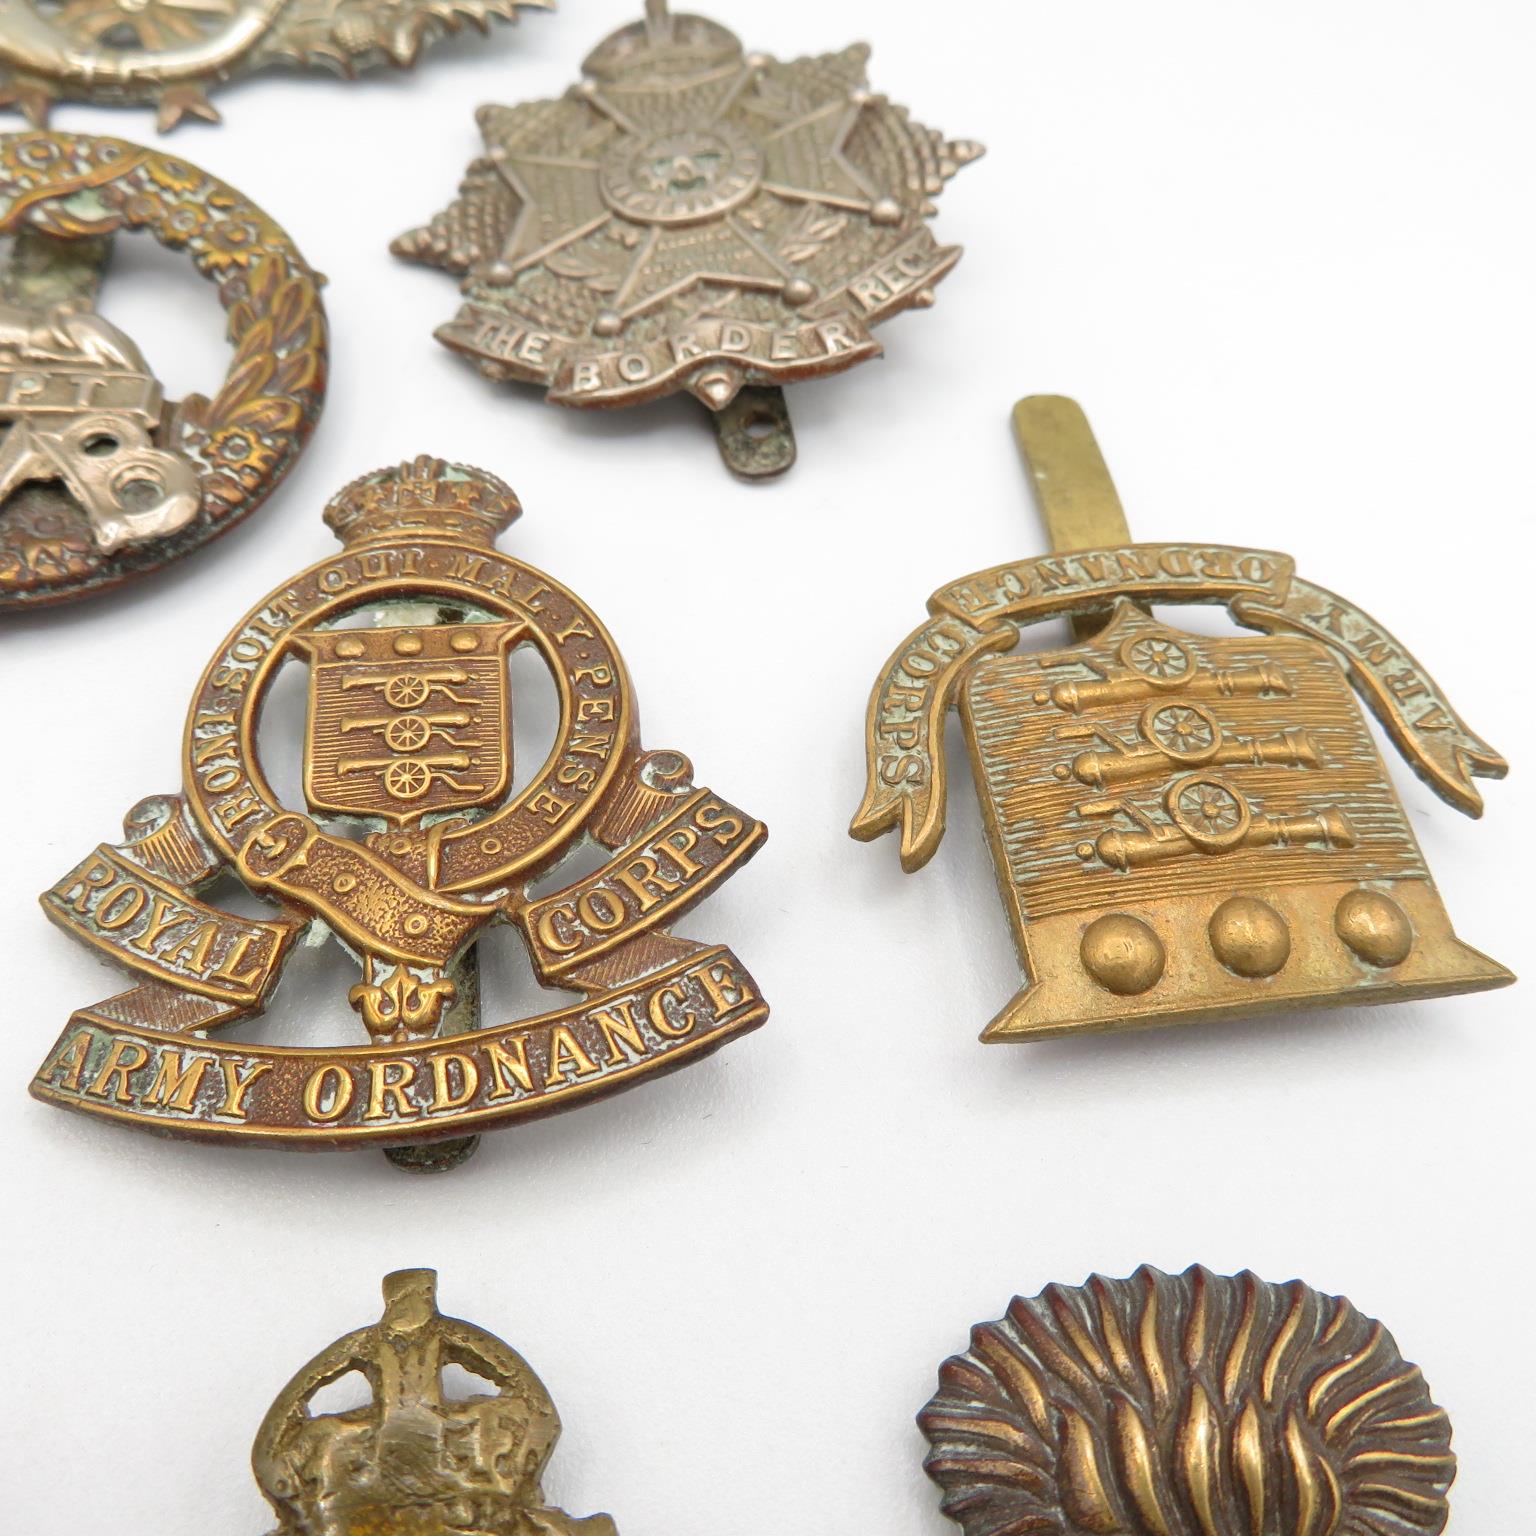 15x military cap badges including Tank Reg Border East etc. - - Image 5 of 8